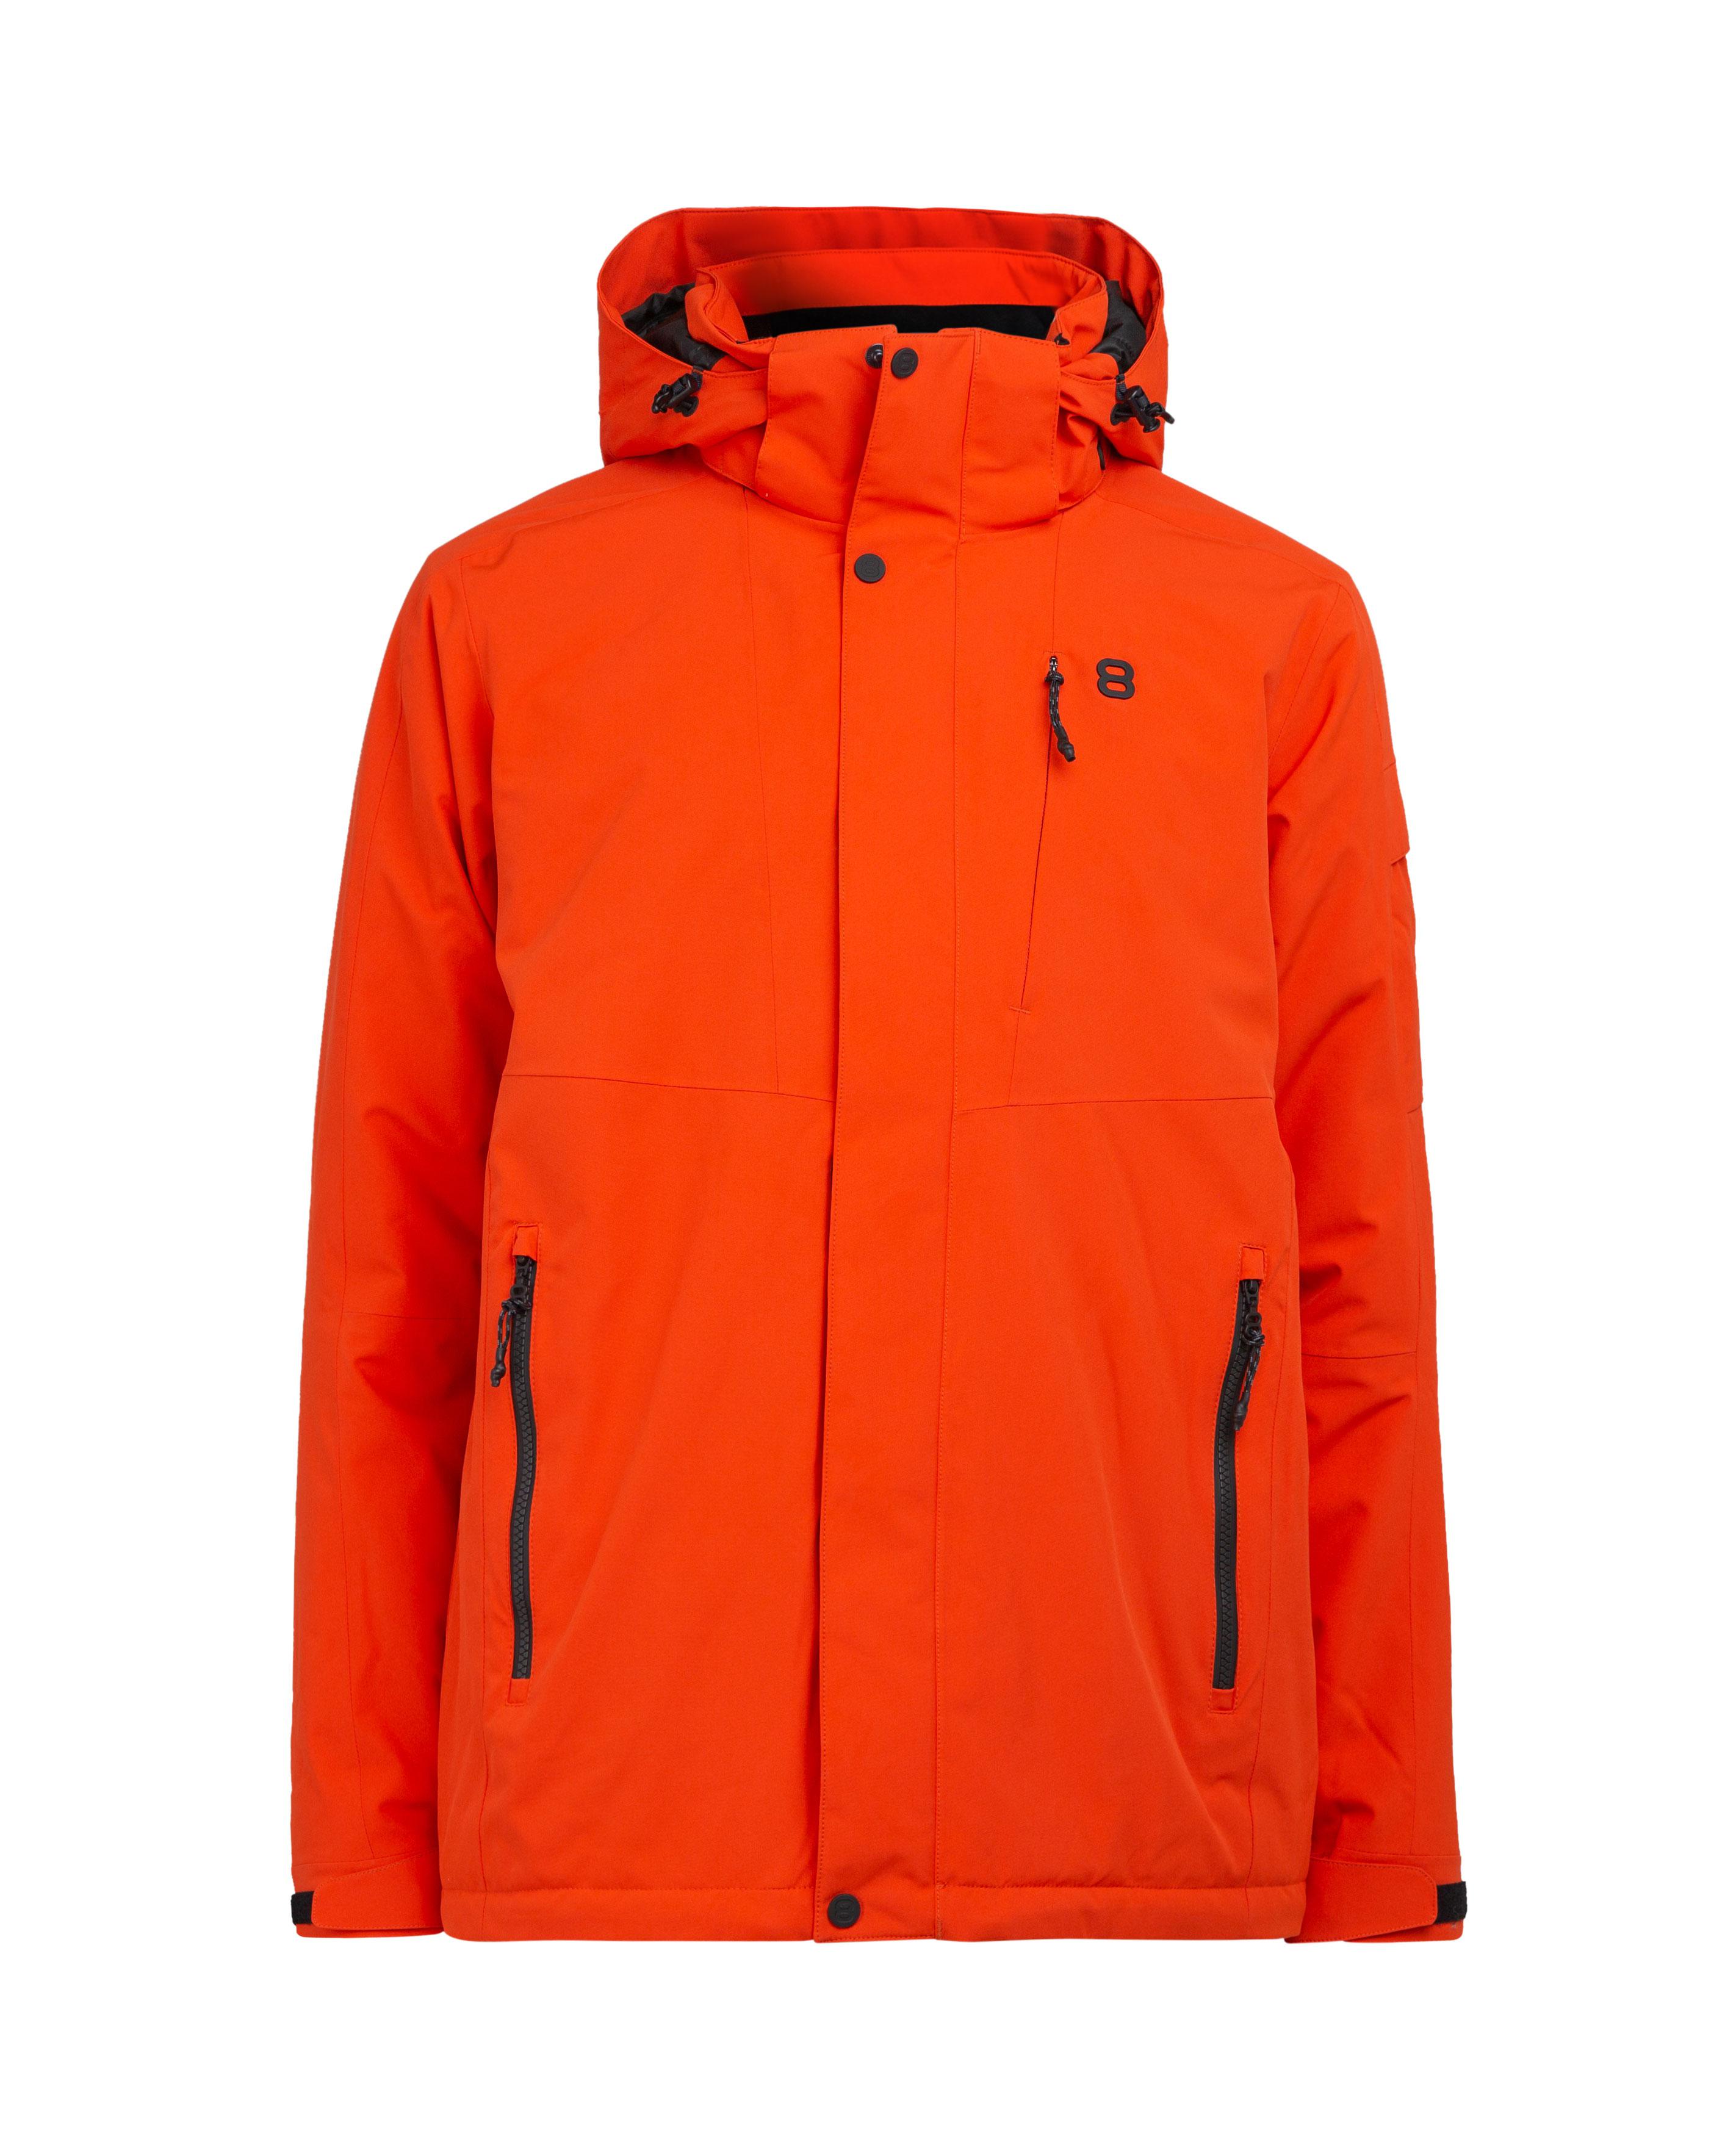 Quady Jacket Chili - Orange Ski Jacke Herren